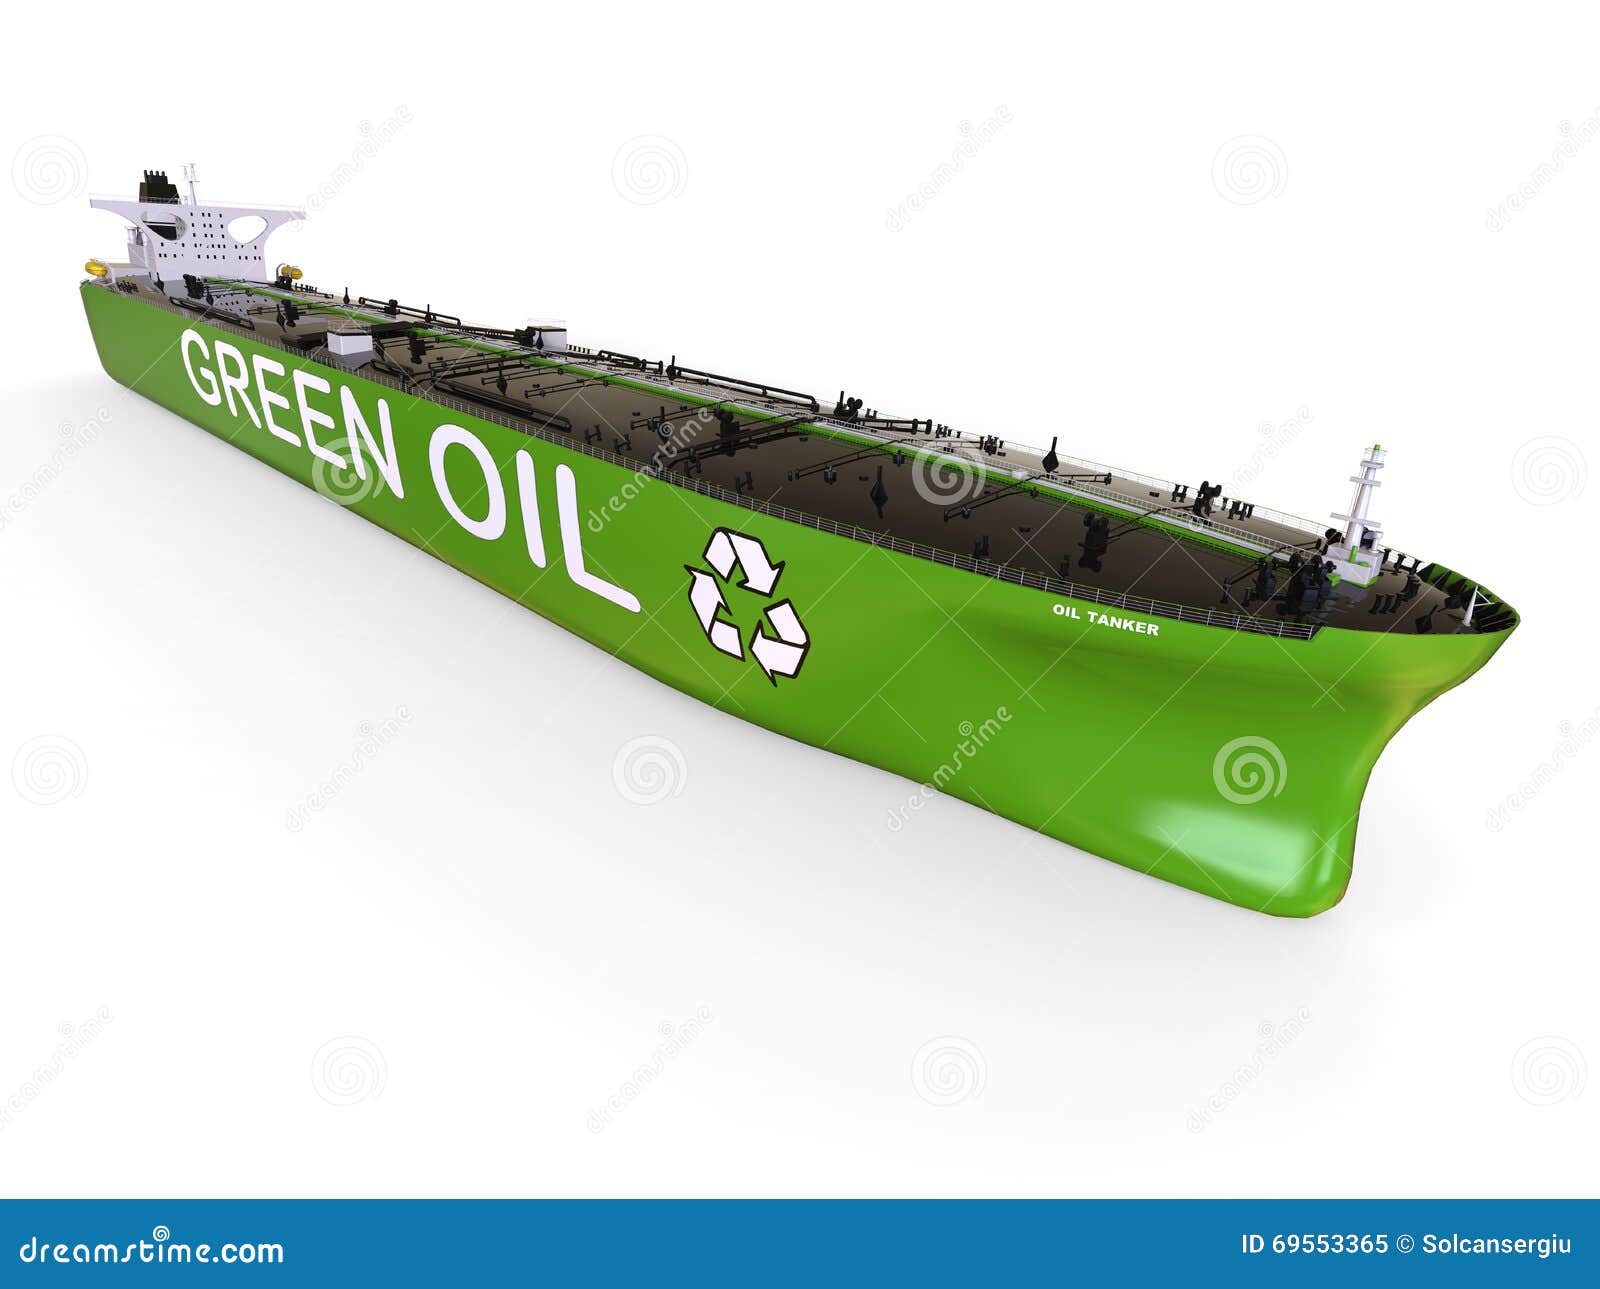 https://thumbs.dreamstime.com/z/green-oil-tanker-concept-d-render-image-representing-69553365.jpg